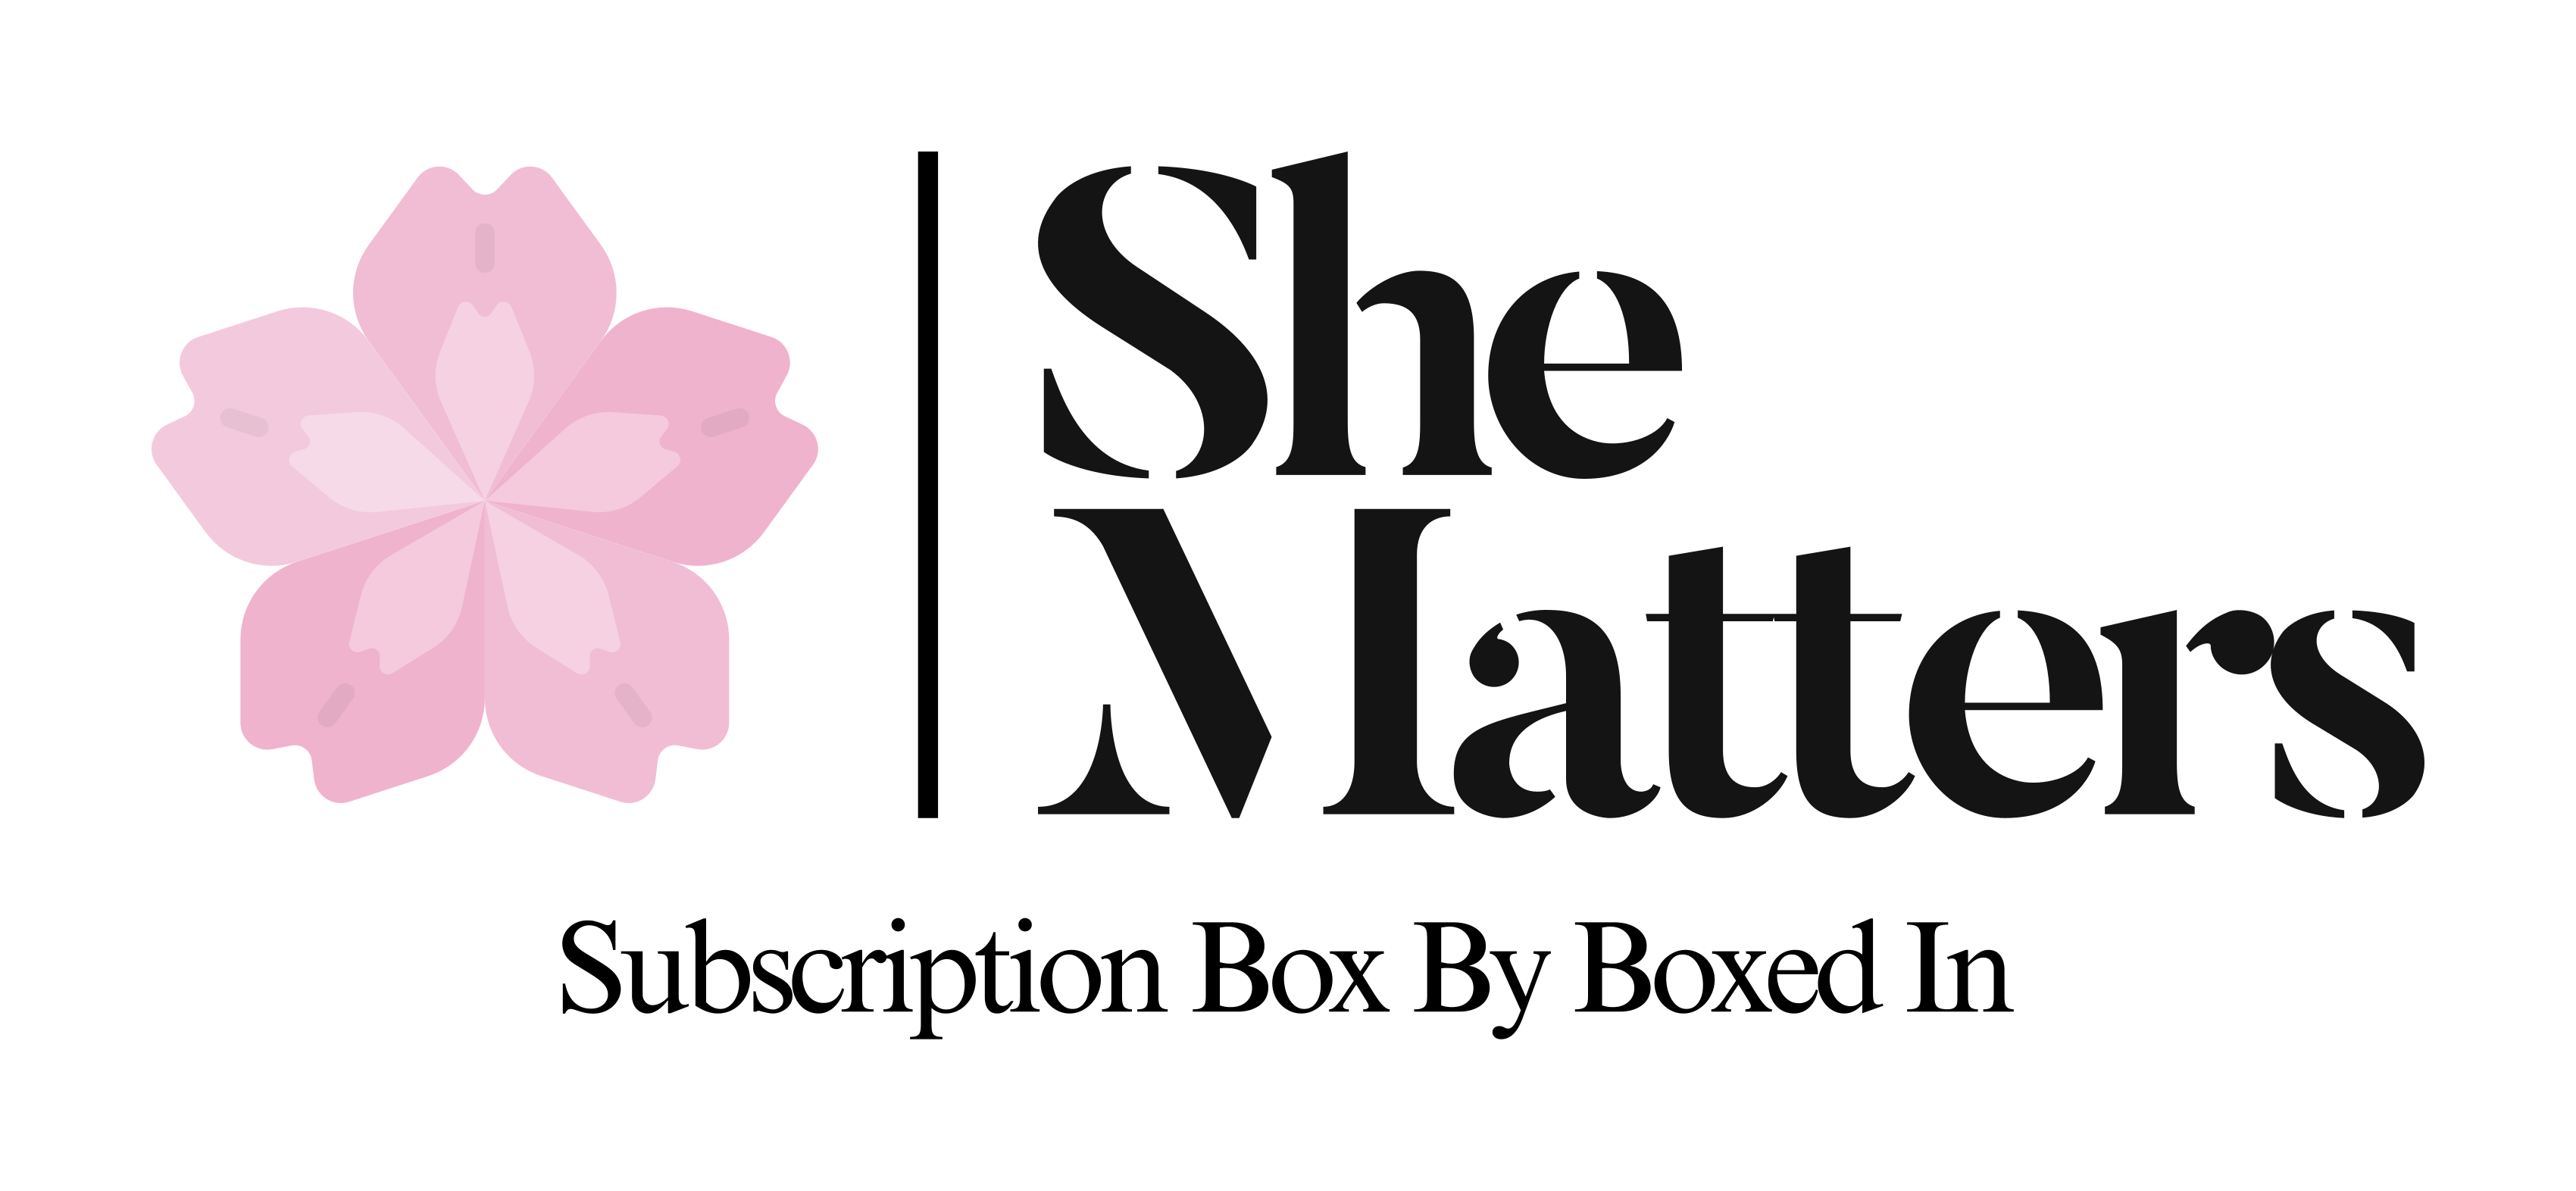 She Matters Subscription Box, LLC